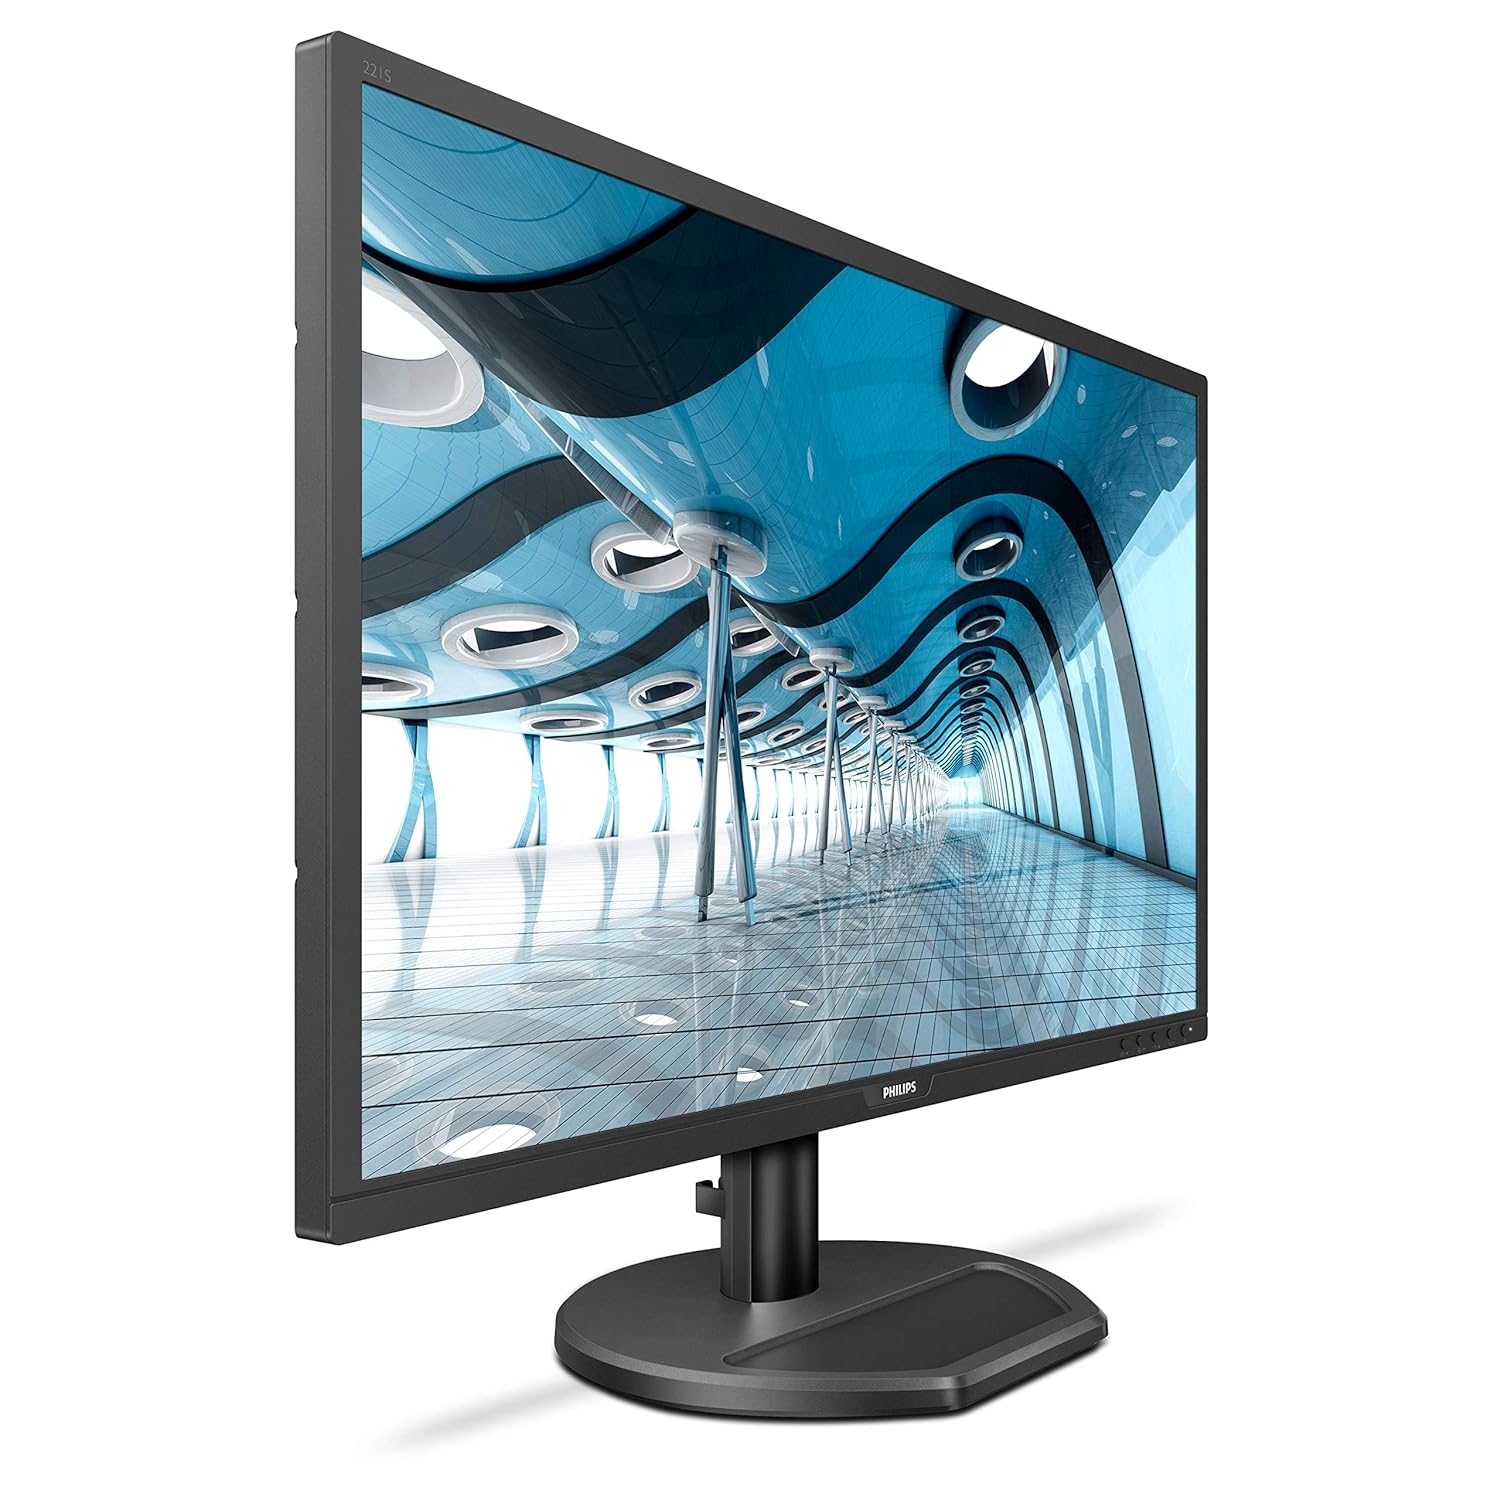 Philips 22 1920x1080p Smart Image LED Monitor | TN Panel, HDMI/VGA Port, 1 Ms Response, Adjustable Stand - 221S8Lhsb/94